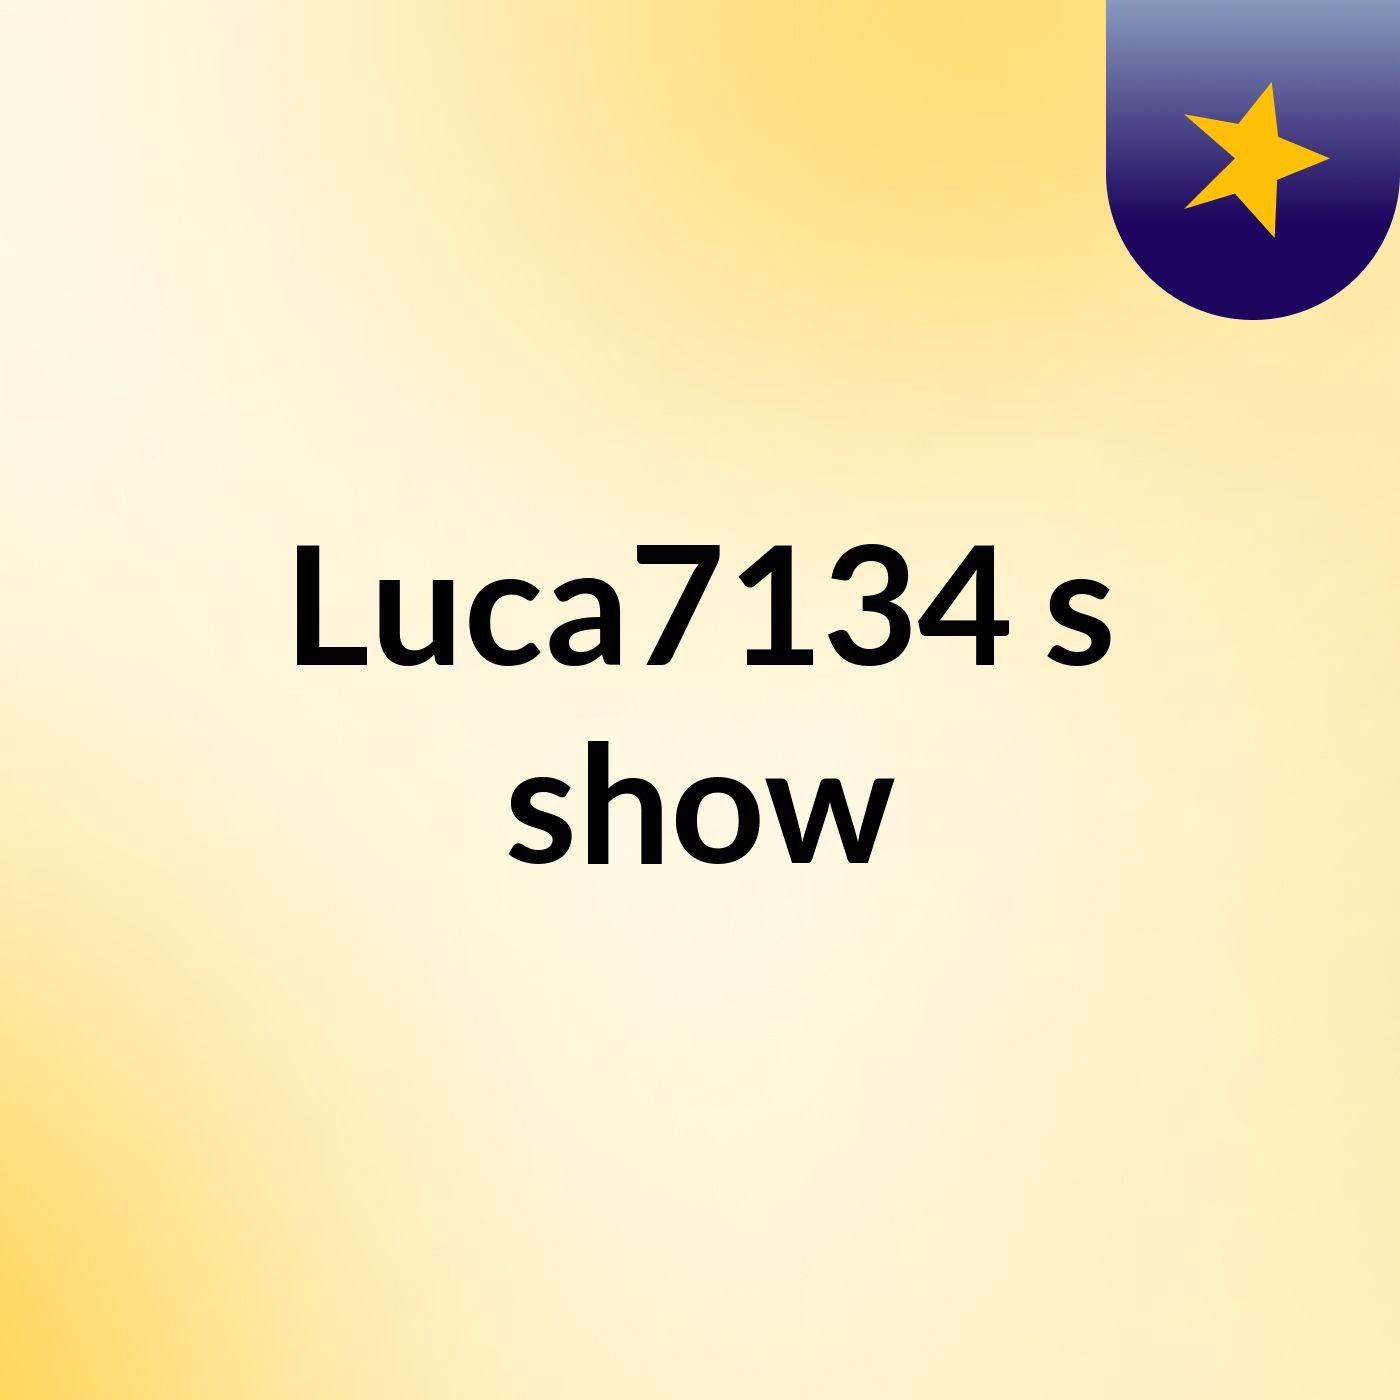 Luca7134's show